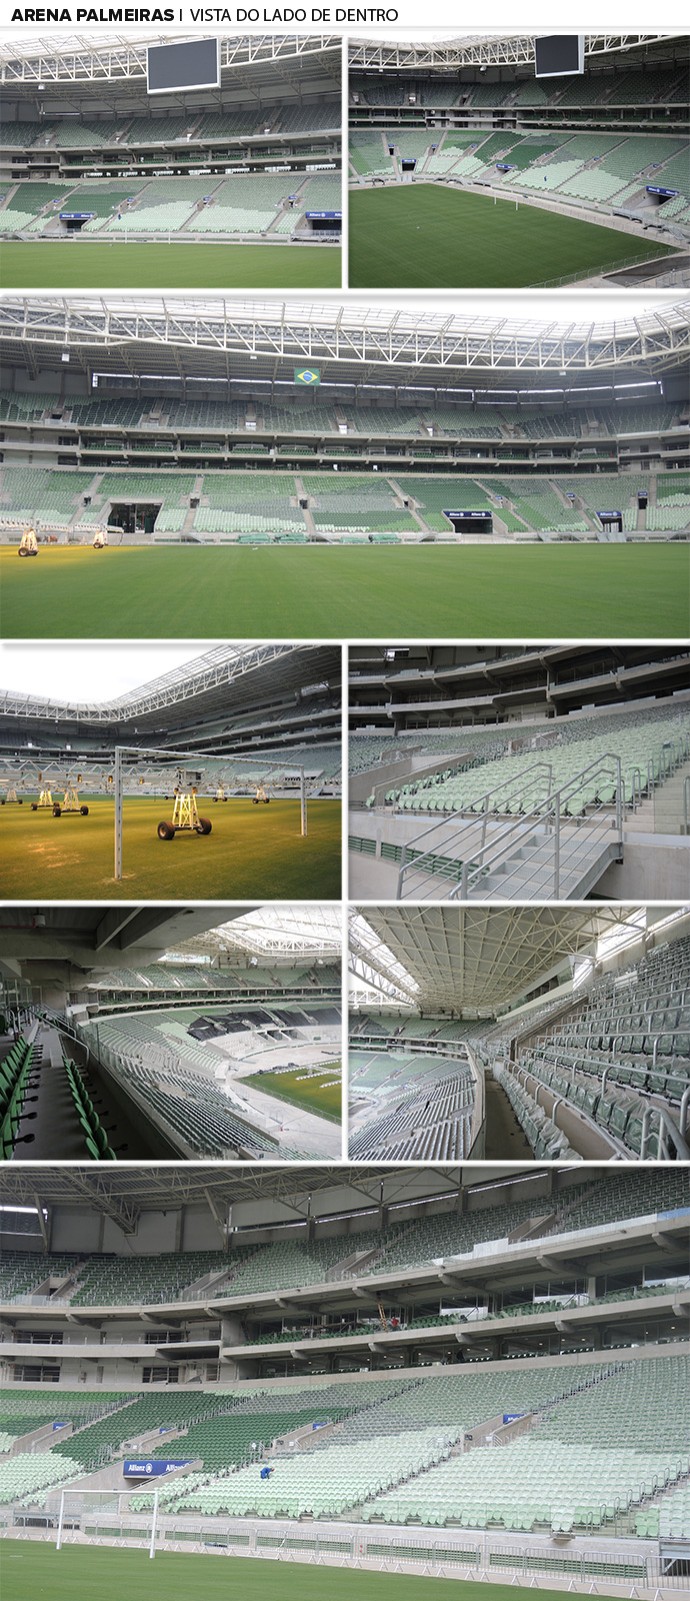 Mosaico - Arena Palmeiras vista por dentro (Foto: Editoria de arte)